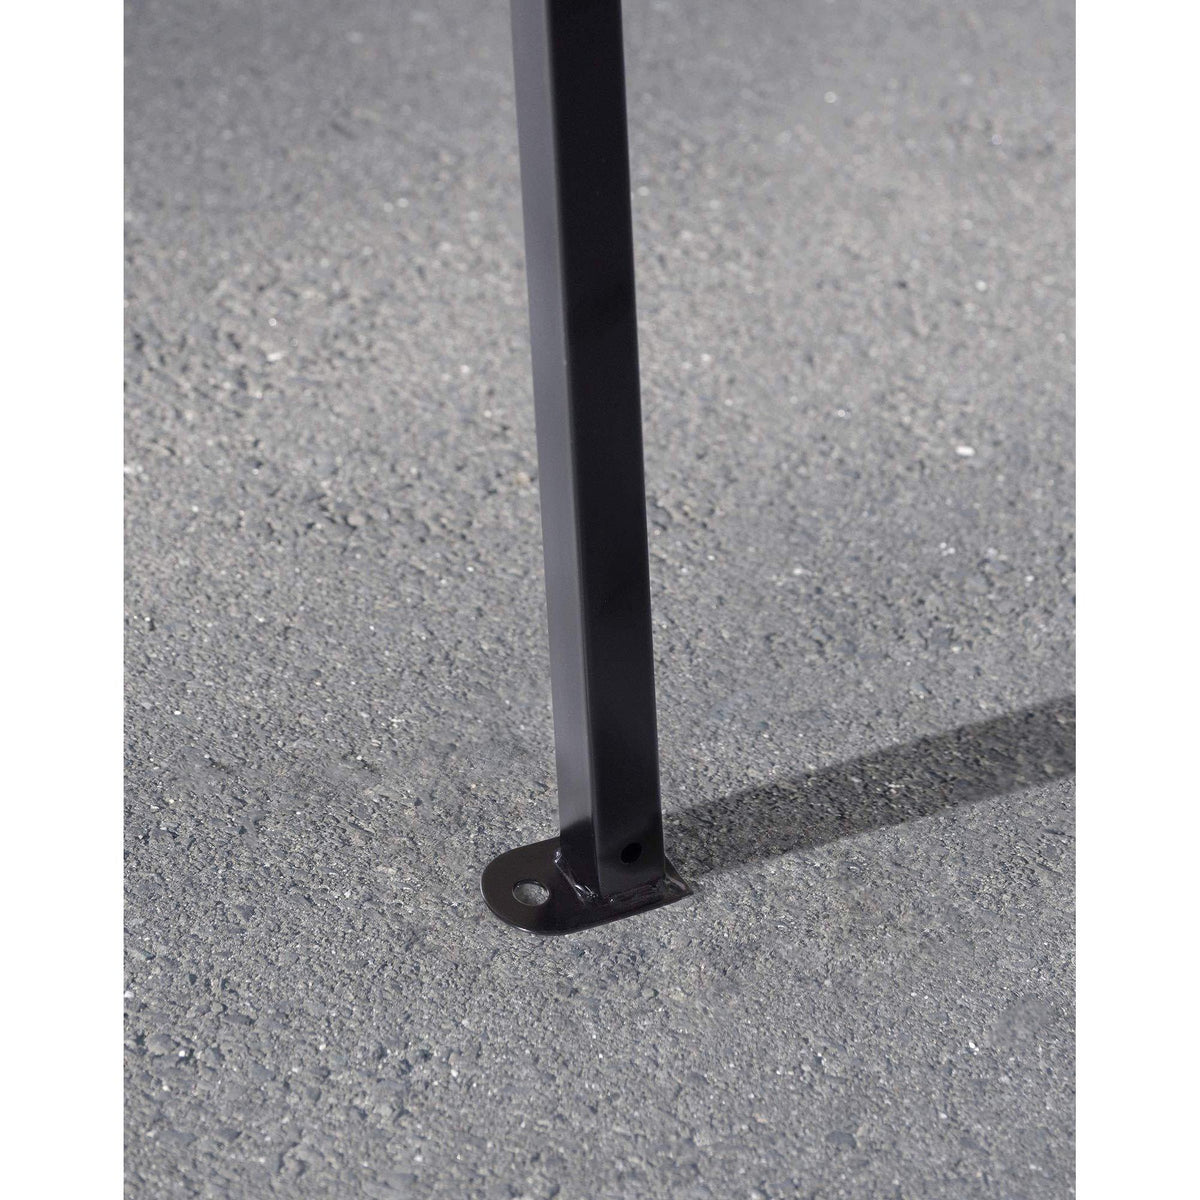 Quik Shade 167505DS Tech Slant Leg Canopy, 12 x 12', Red